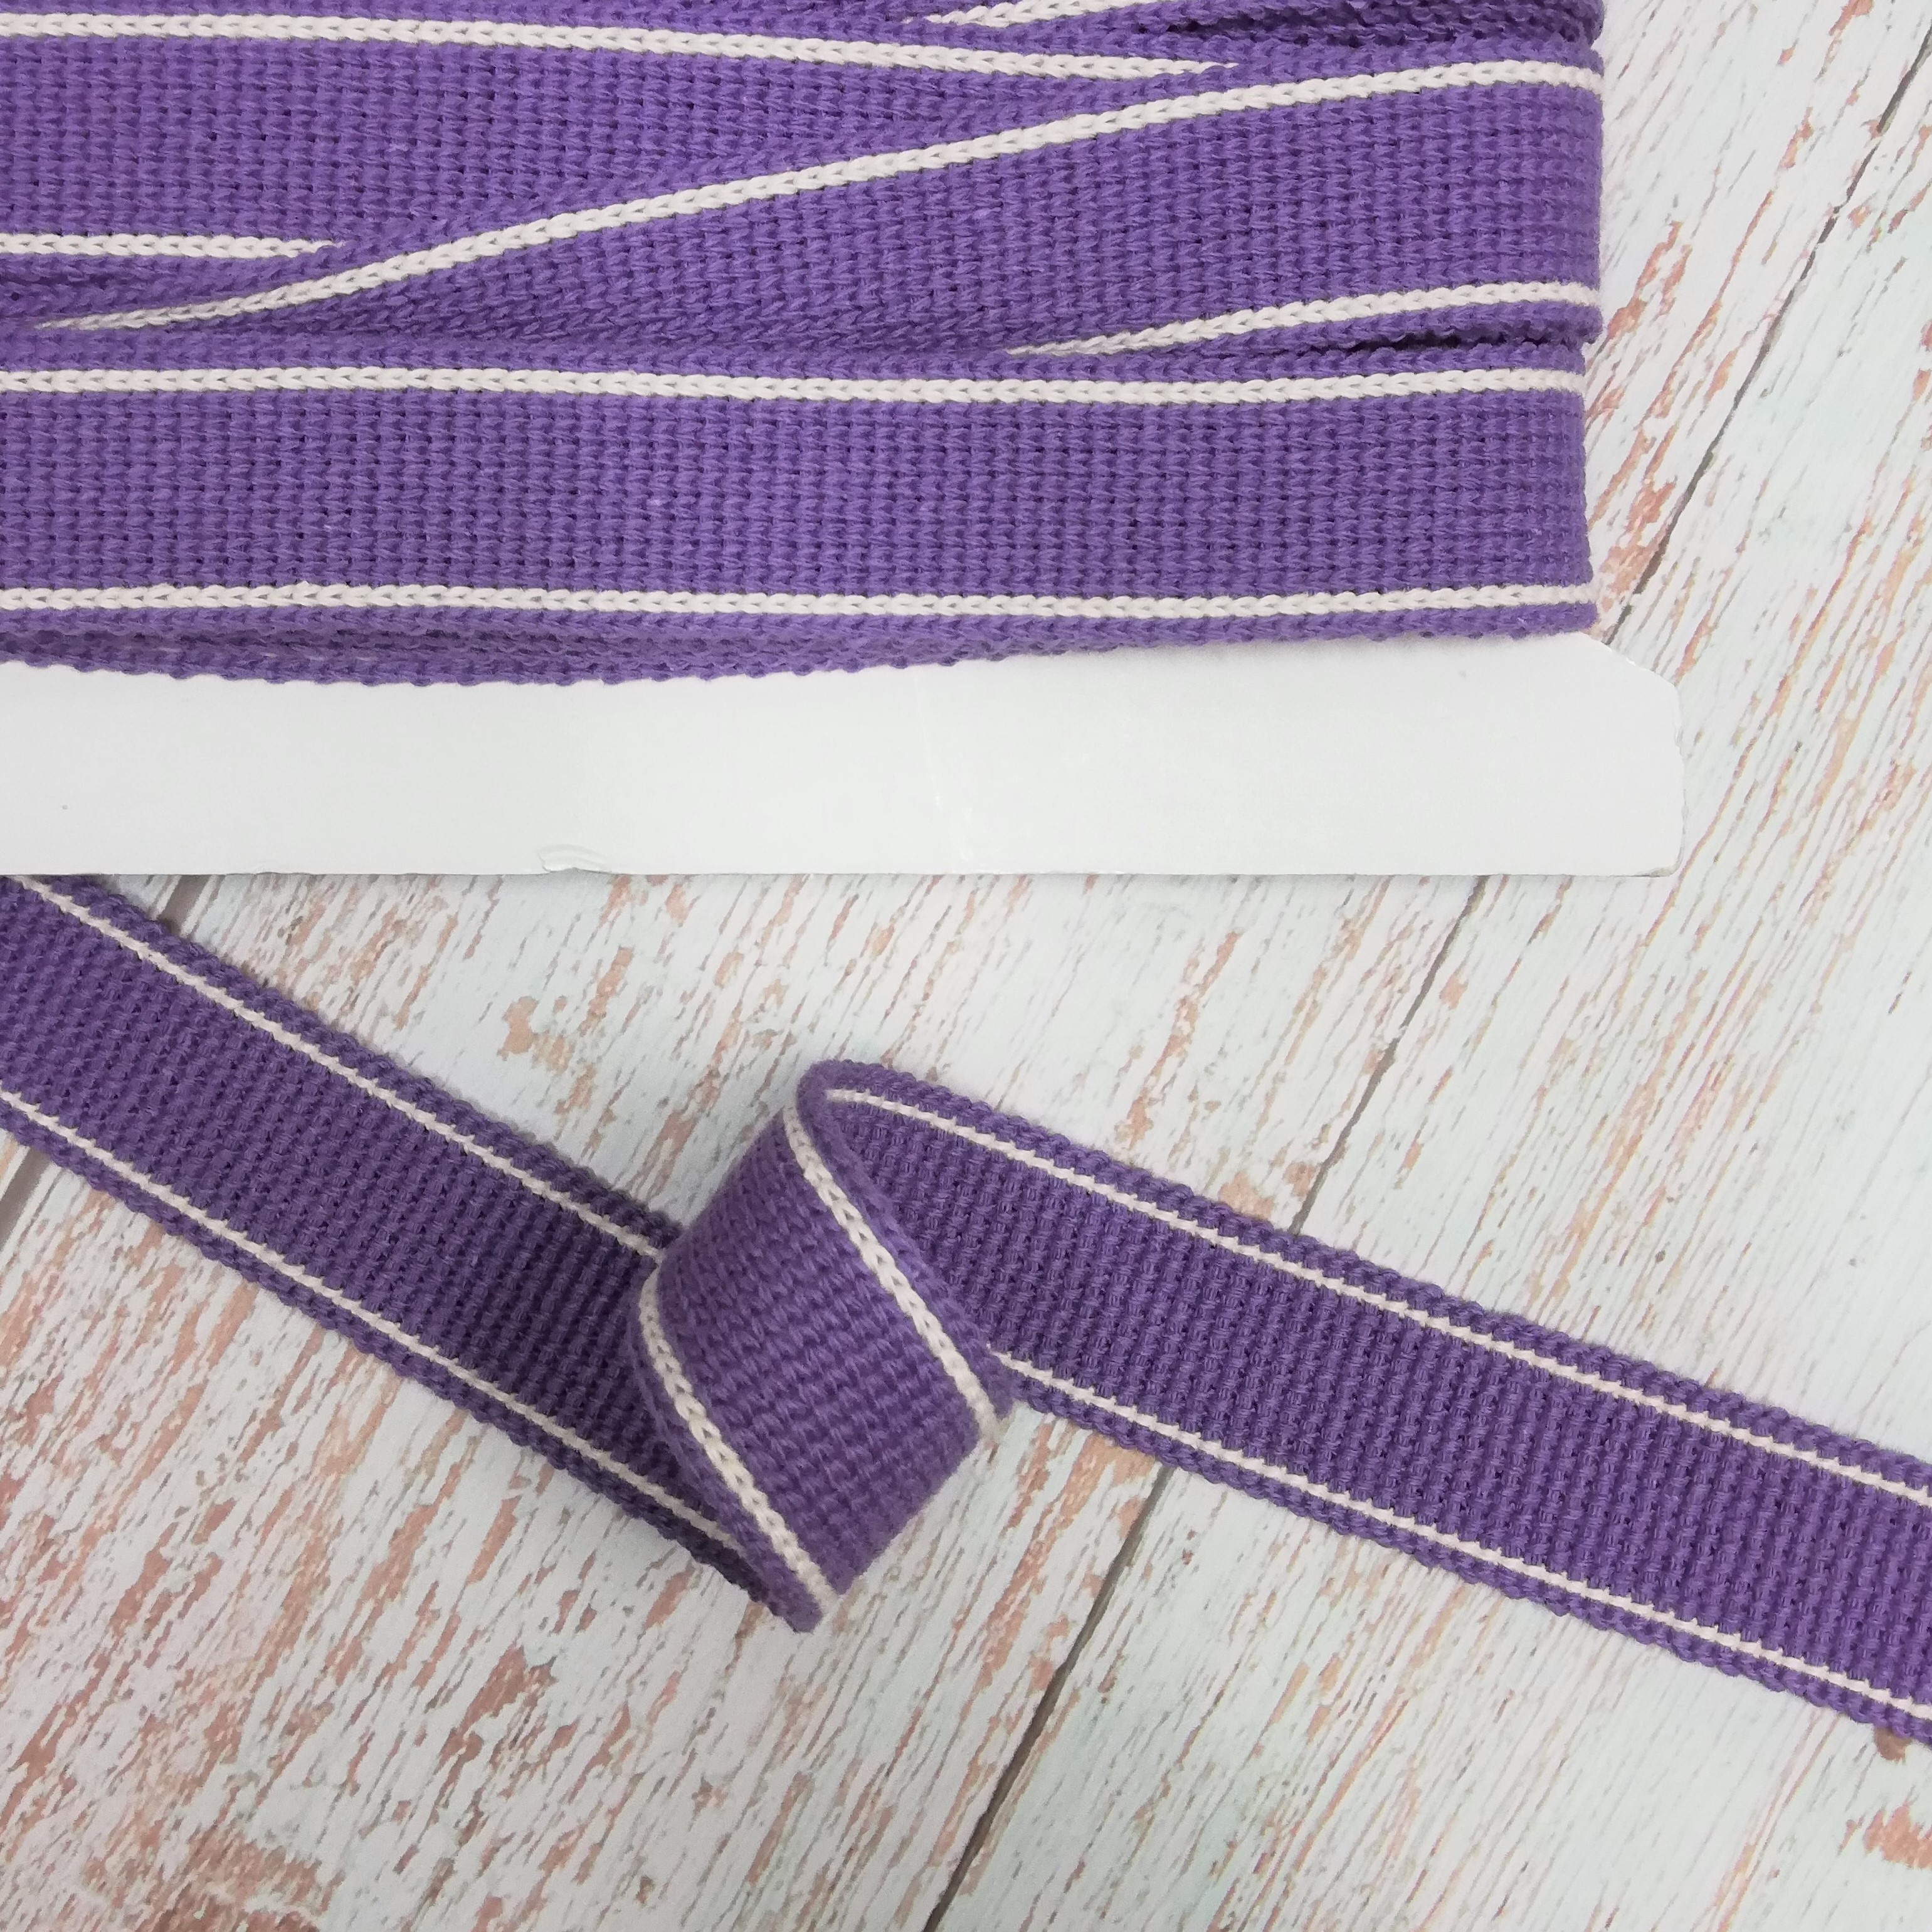 Bag Cotton Webbing - Lupin Purple with Ecru Stripe 30mm Wide